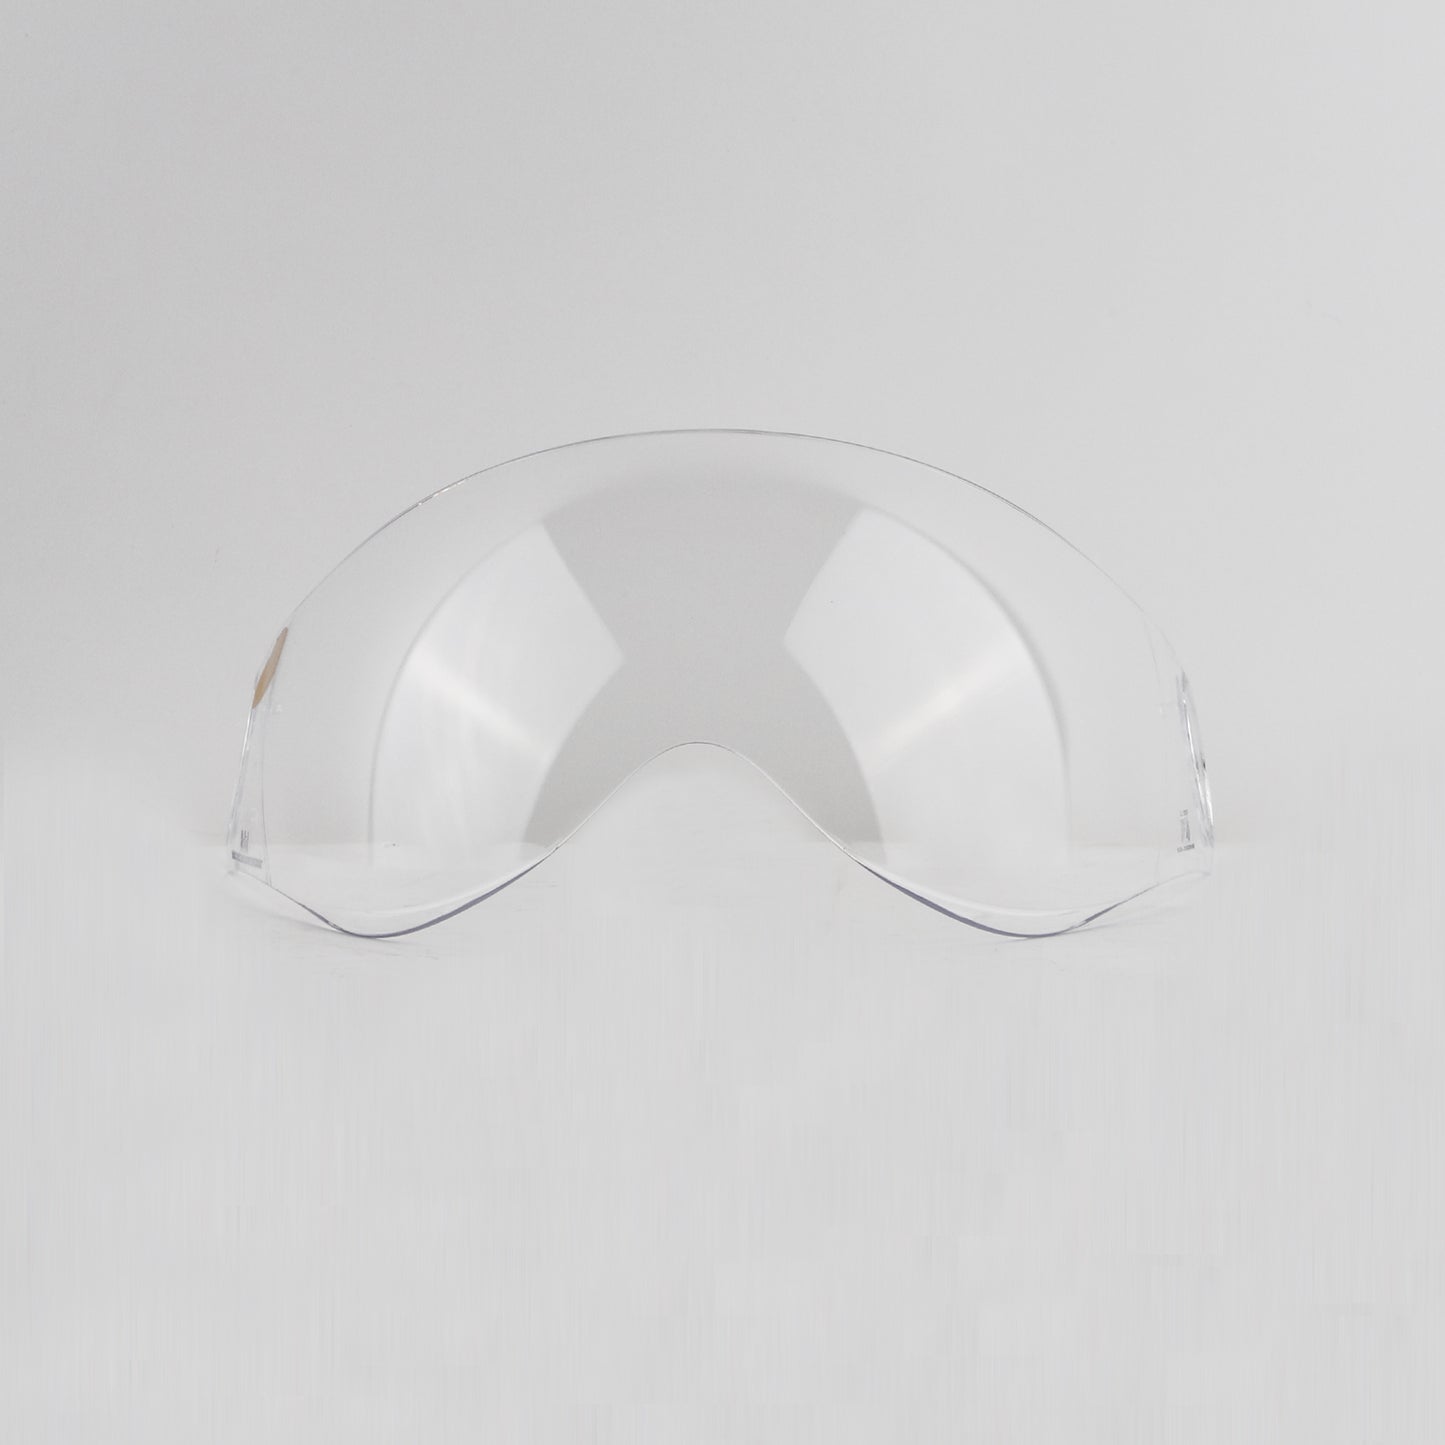 Steelbird SB-50 Polycarbonate Helmet Visor Compatible for All SB-50 Model Helmets (Clear Visor)